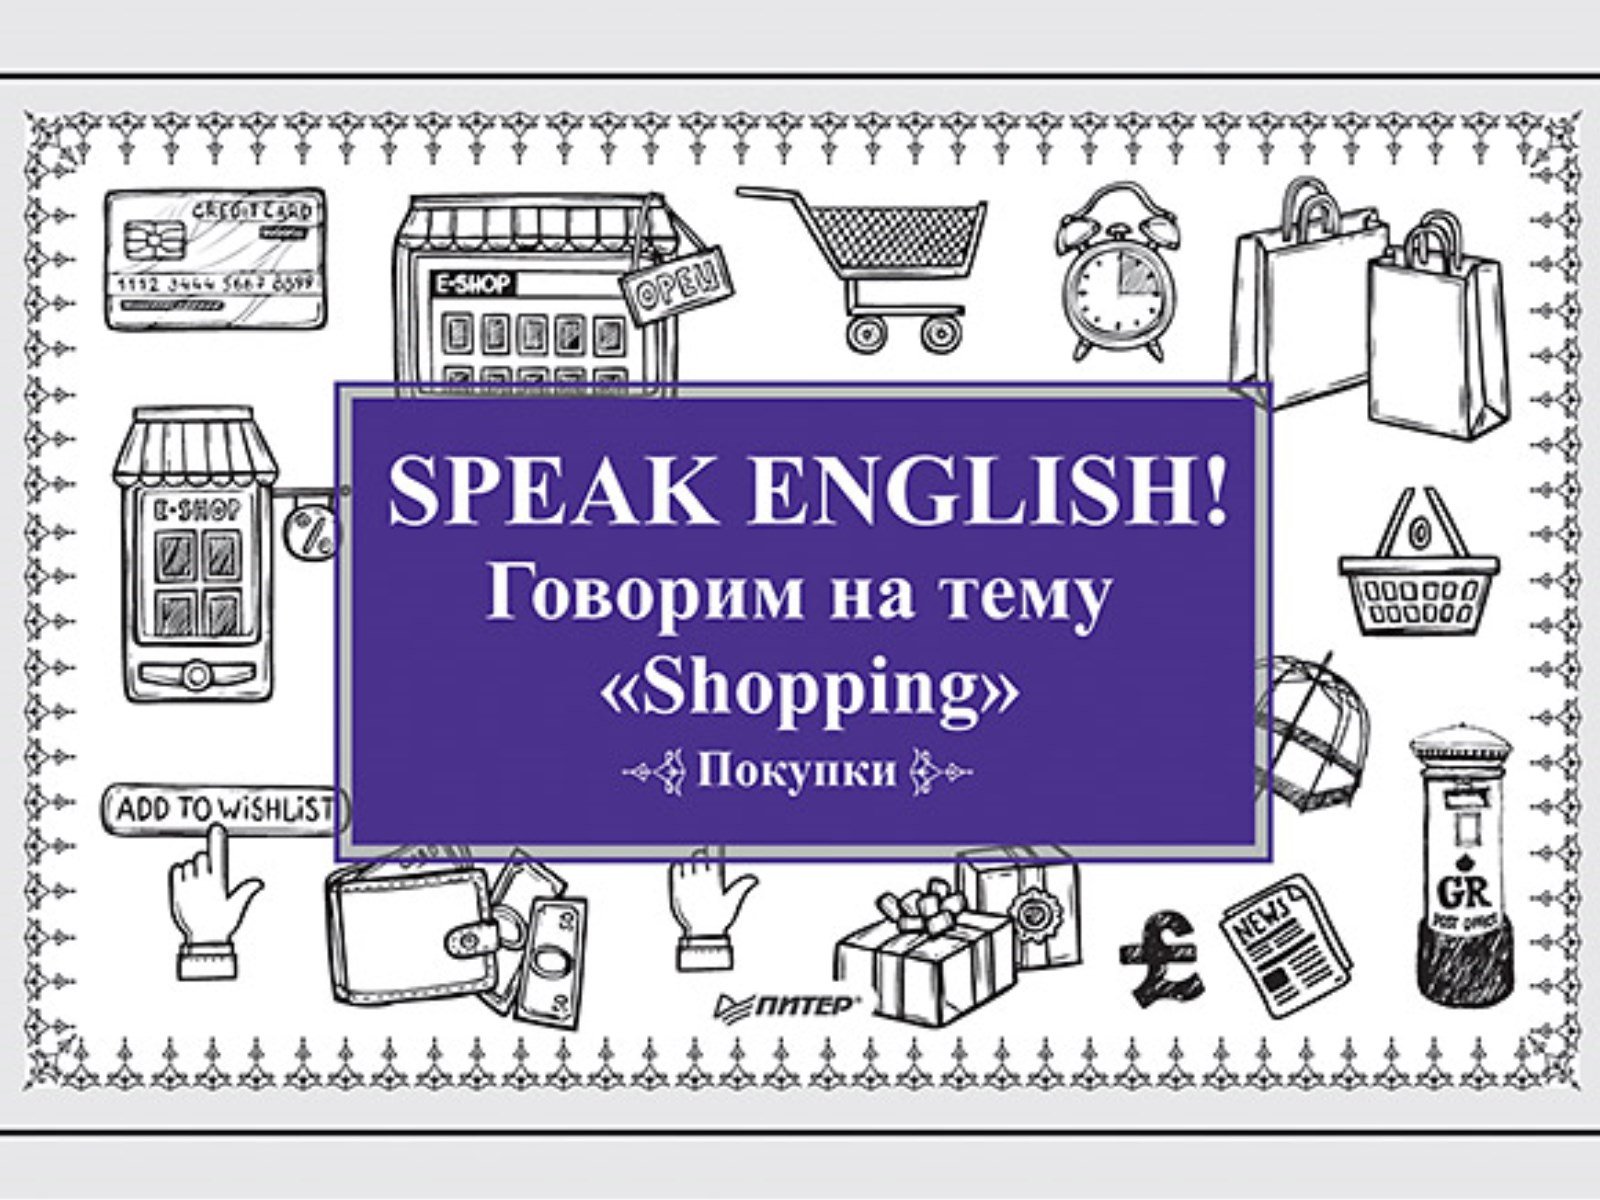 Андронова Е А - Speak ENGLISH! Говорим на тему "Shopping" (Покупки)